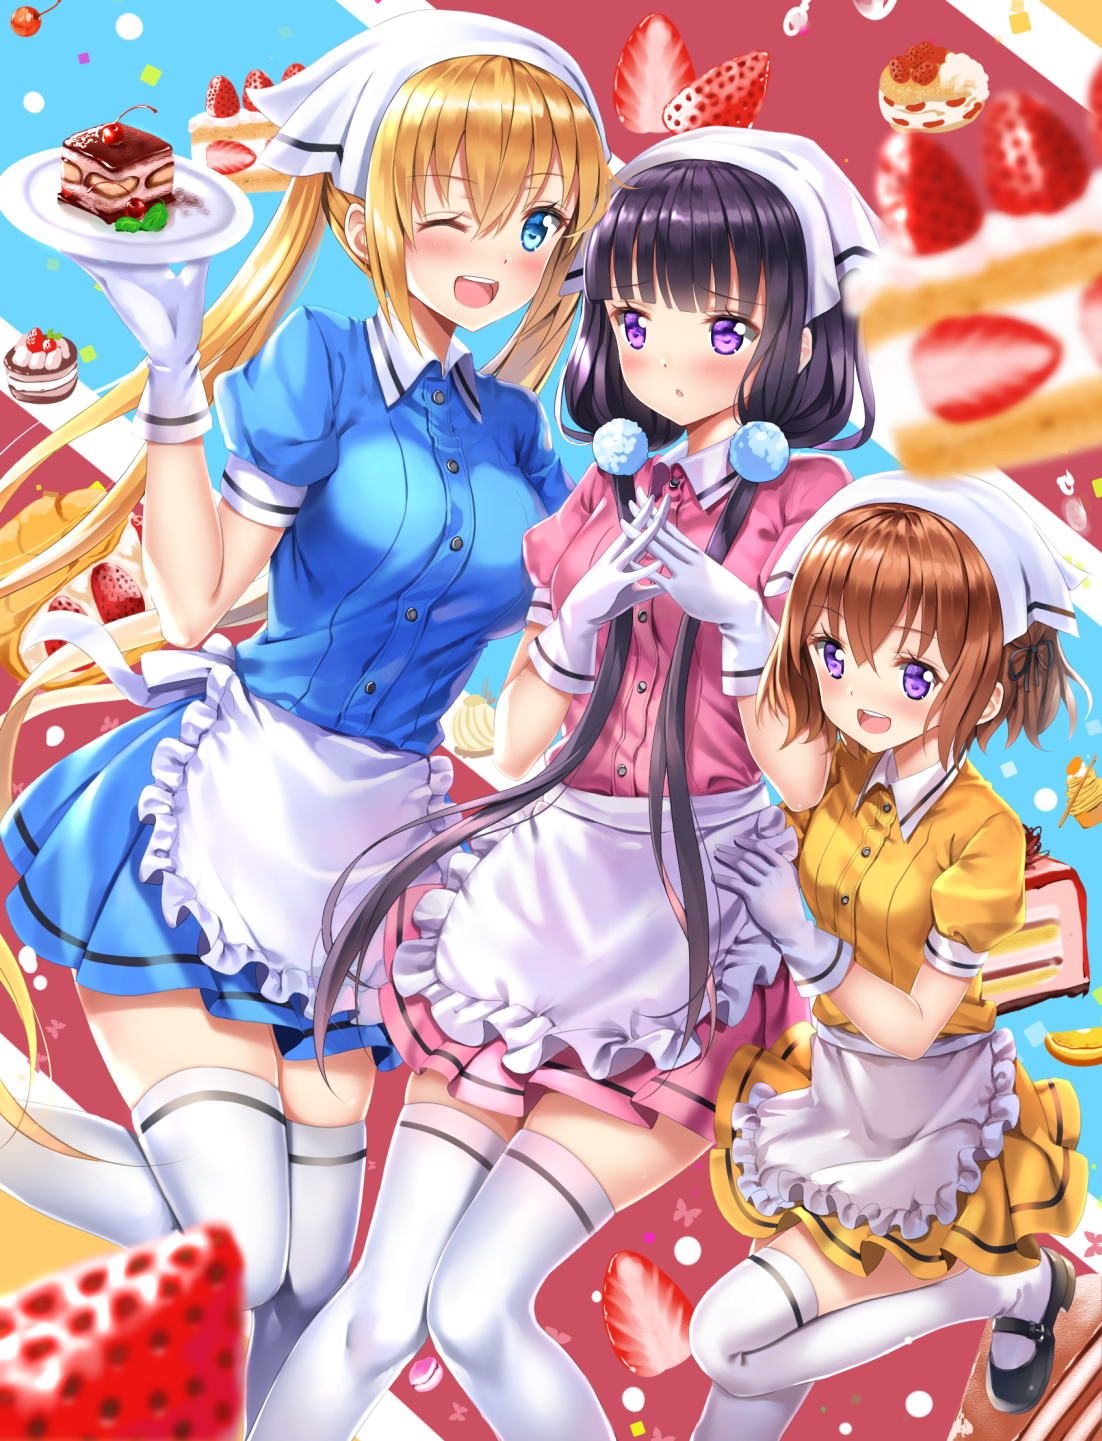 What are you going to order? - Hinata kaho, , Sakuranomiya maika, Blend S, Anime, Art, Anime art